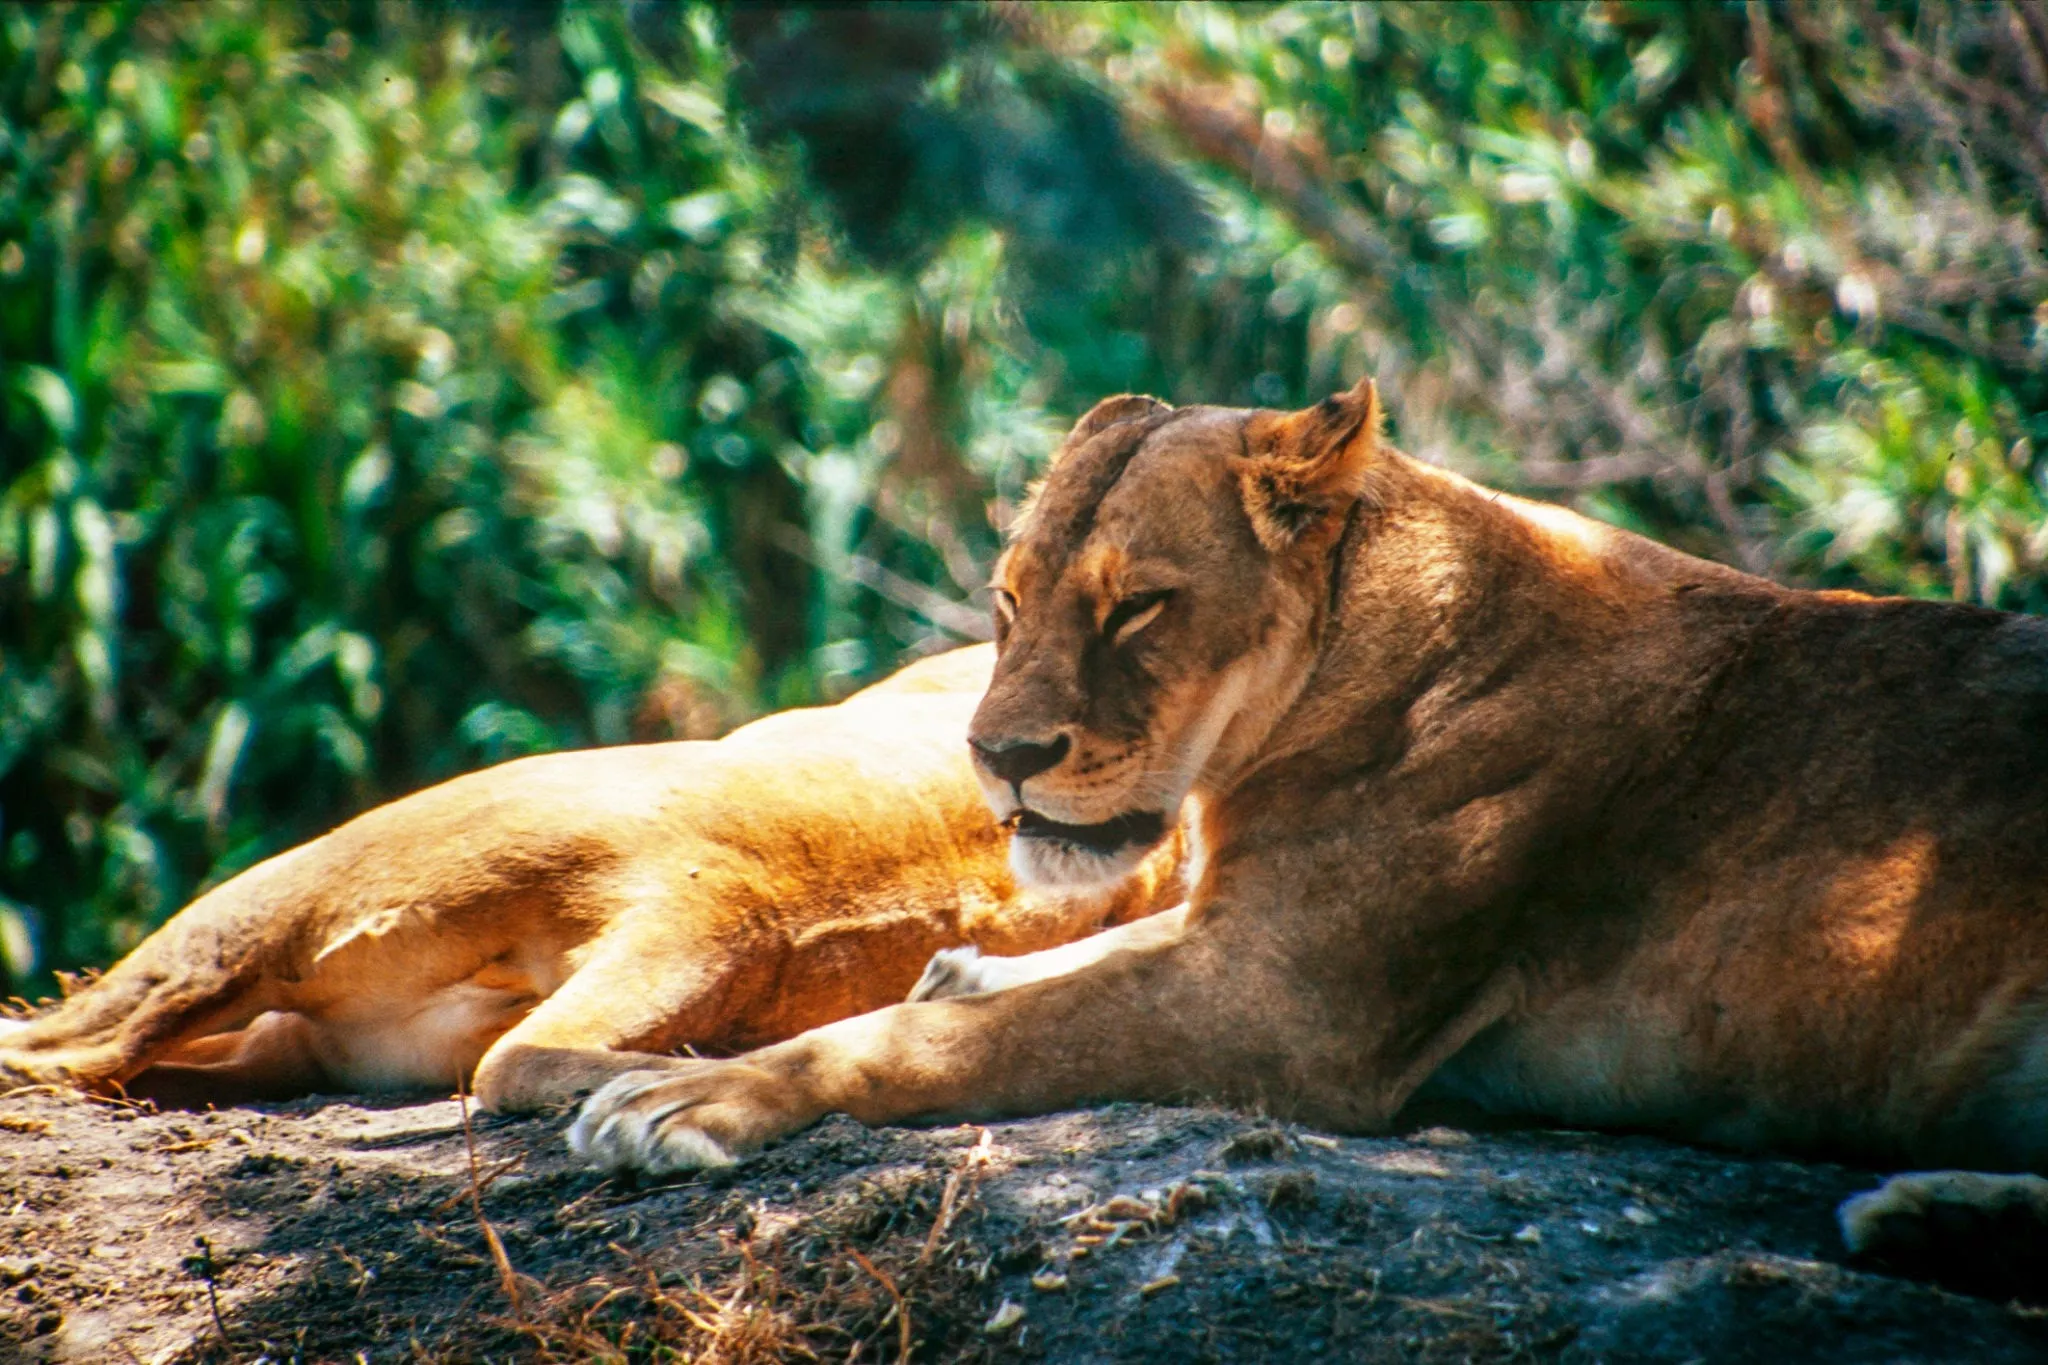 Africam Safari in Mexico, North America | Zoos & Sanctuaries,Safari - Rated 8.4